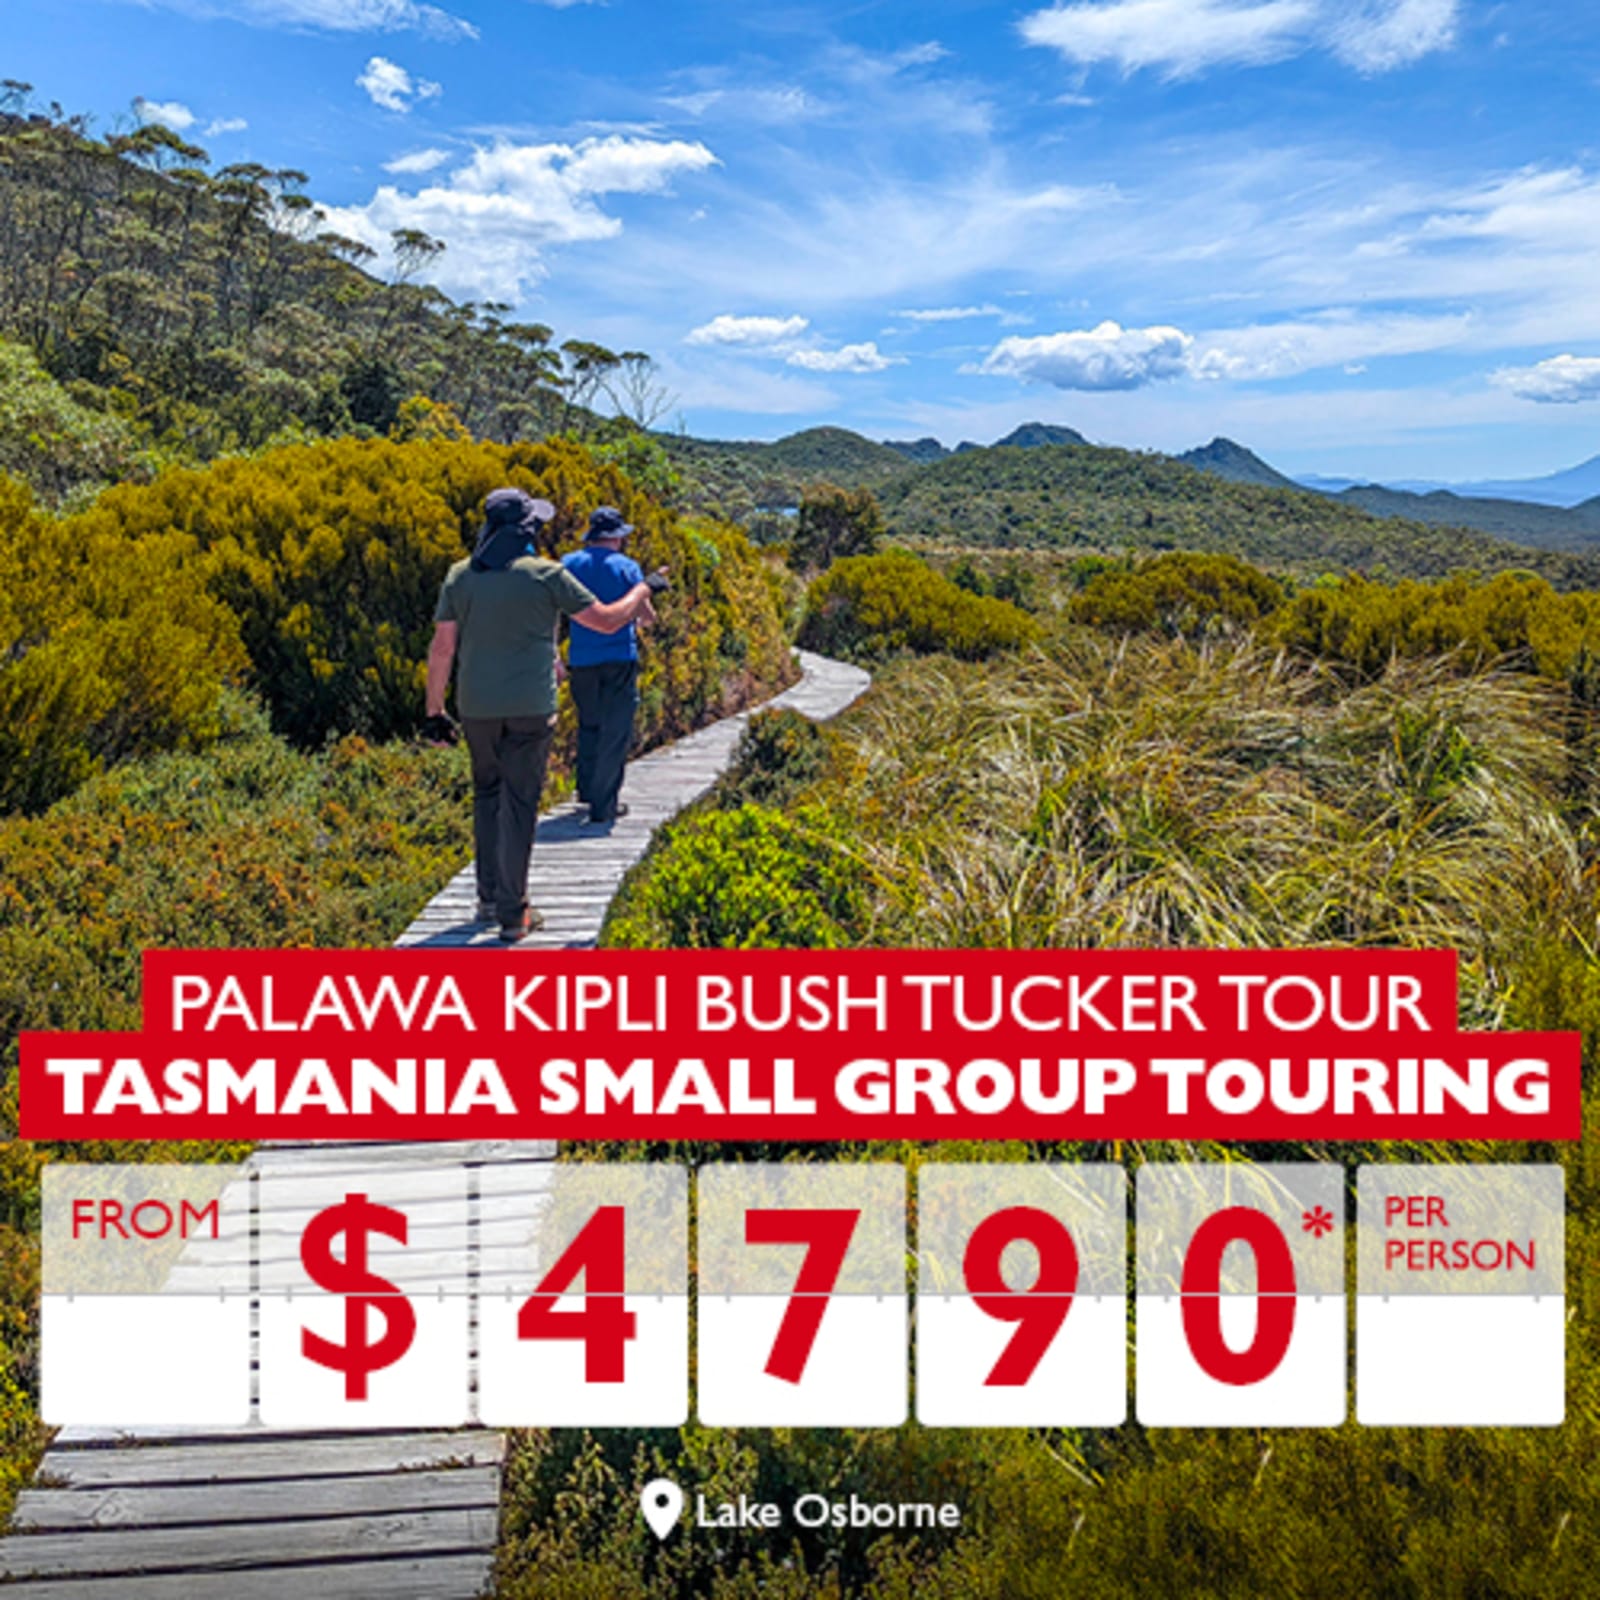 Palawa Kipli Bush Tucker Tour | Tasmania Small group touring from $4790* per person